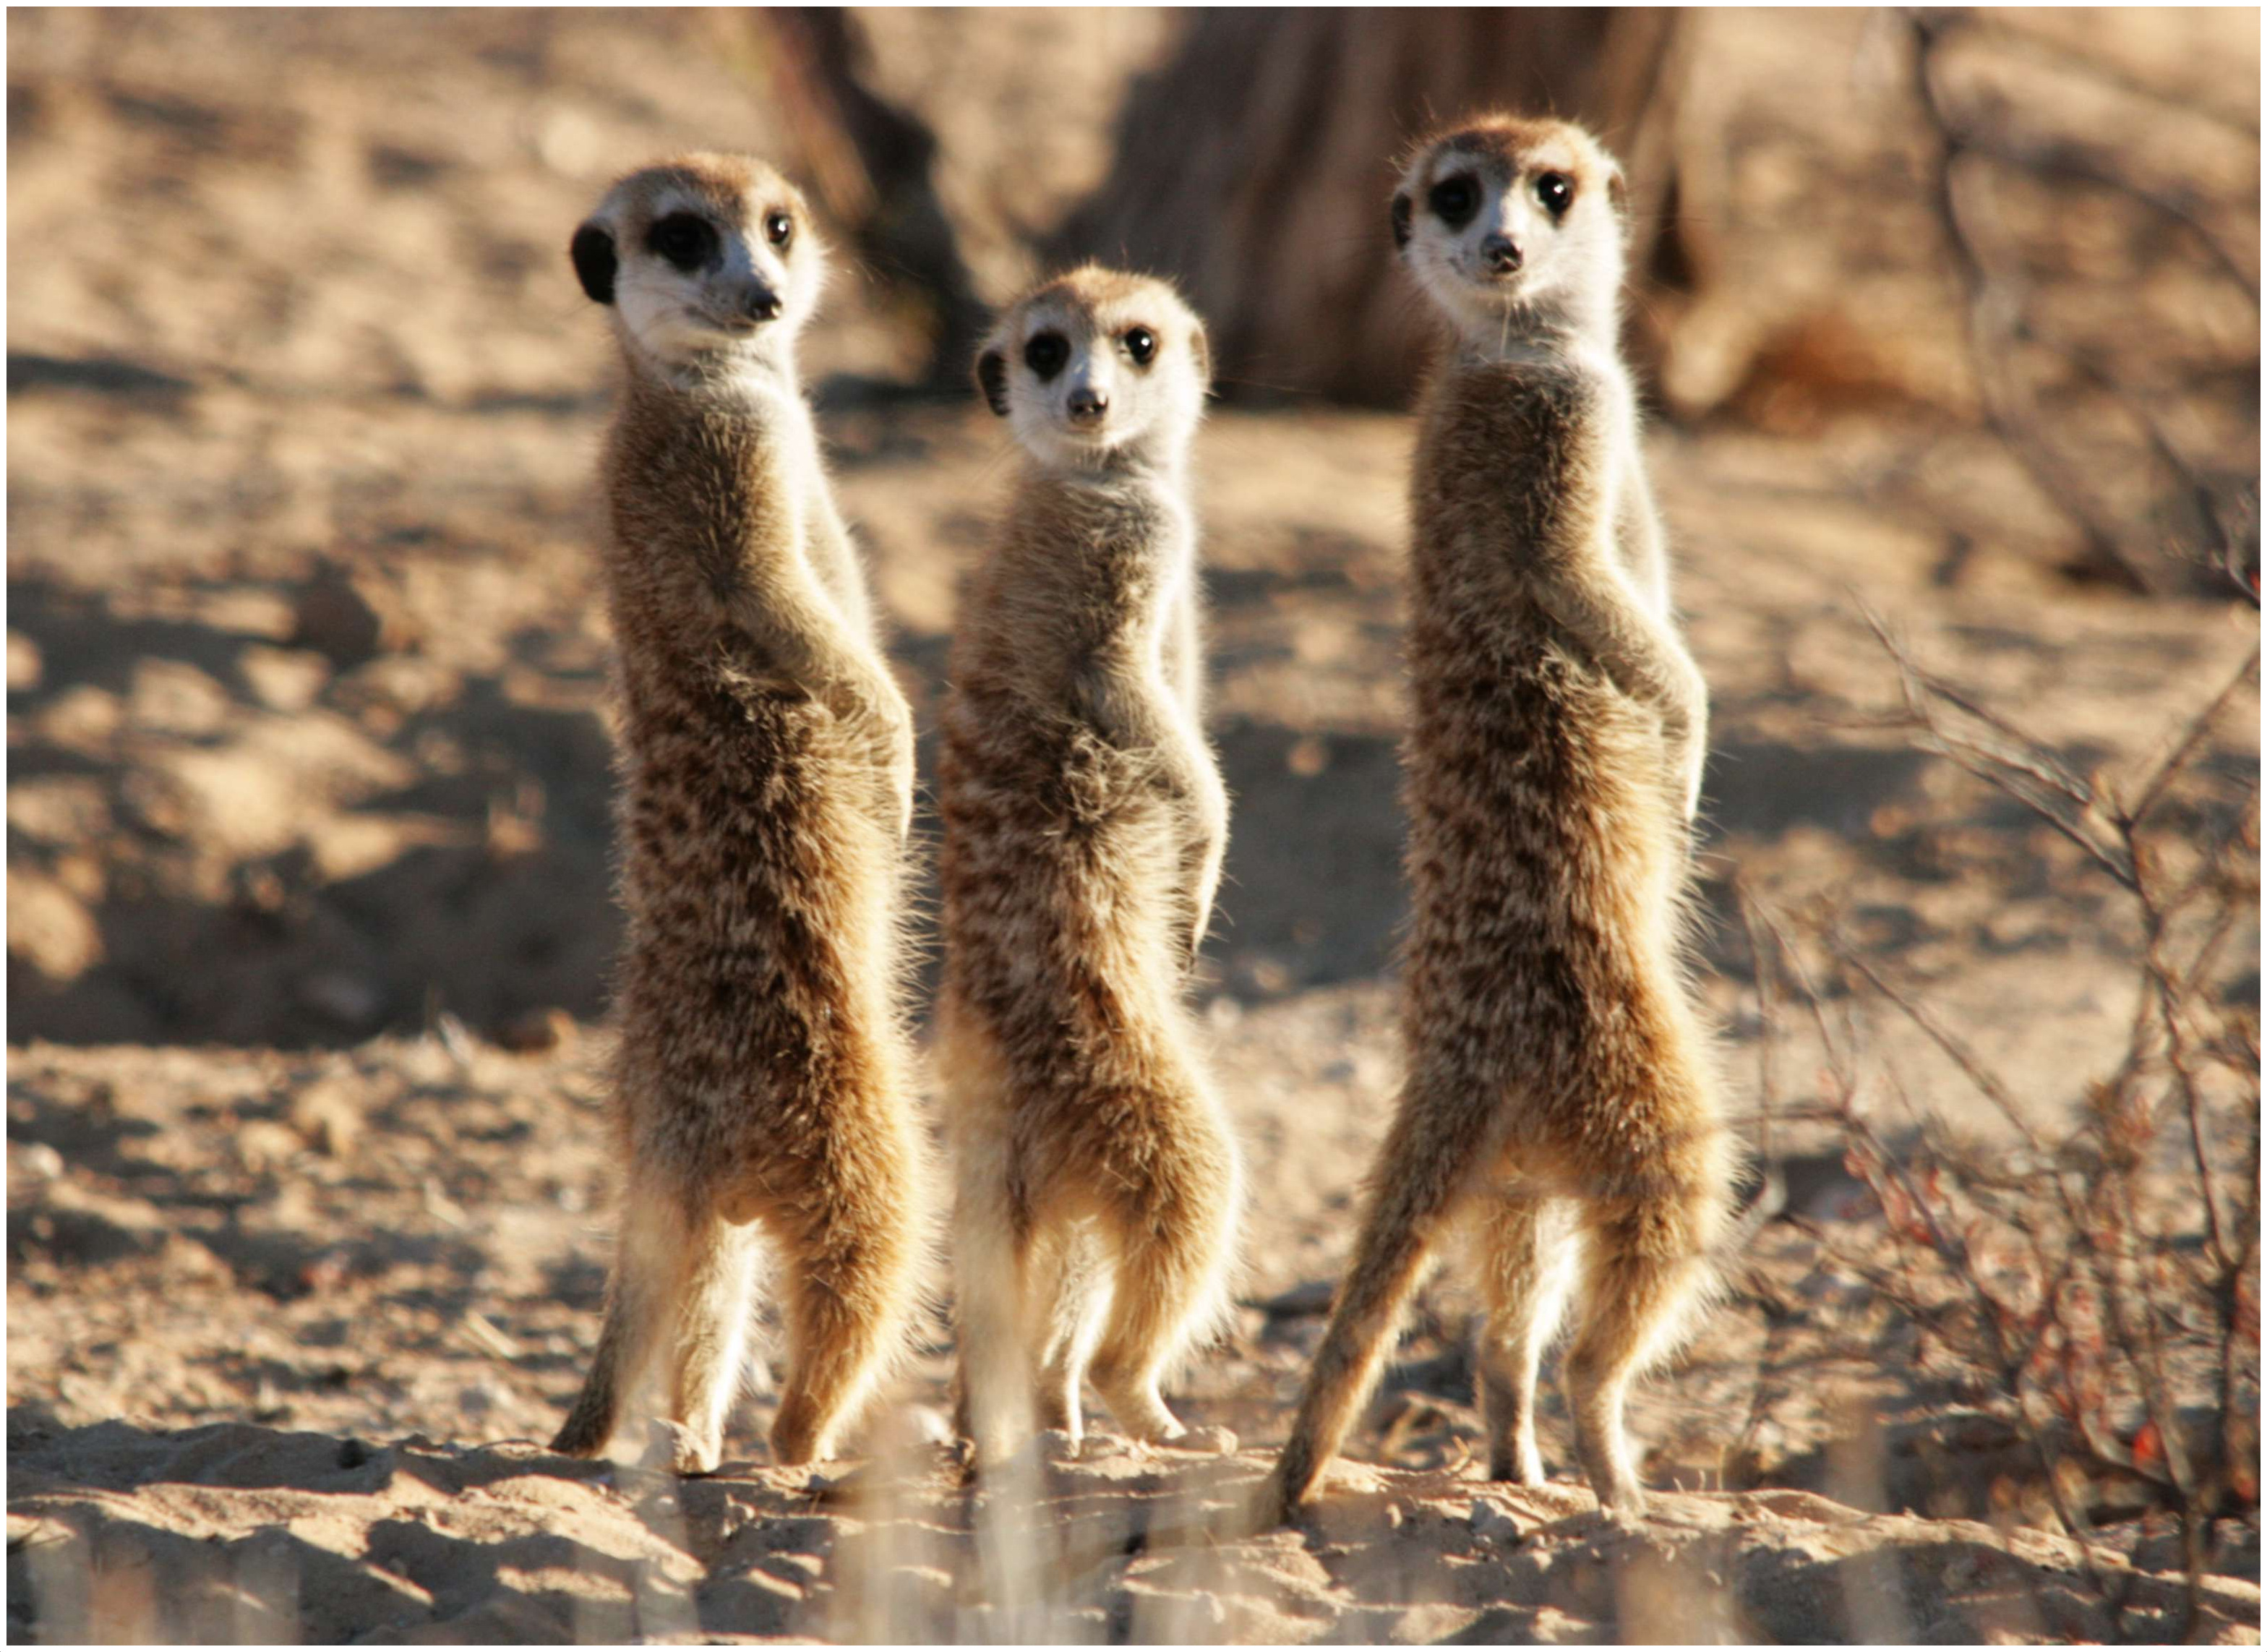 Meerkat - Interesting Facts, Pictures, Behavior, Diet, Appearance ...